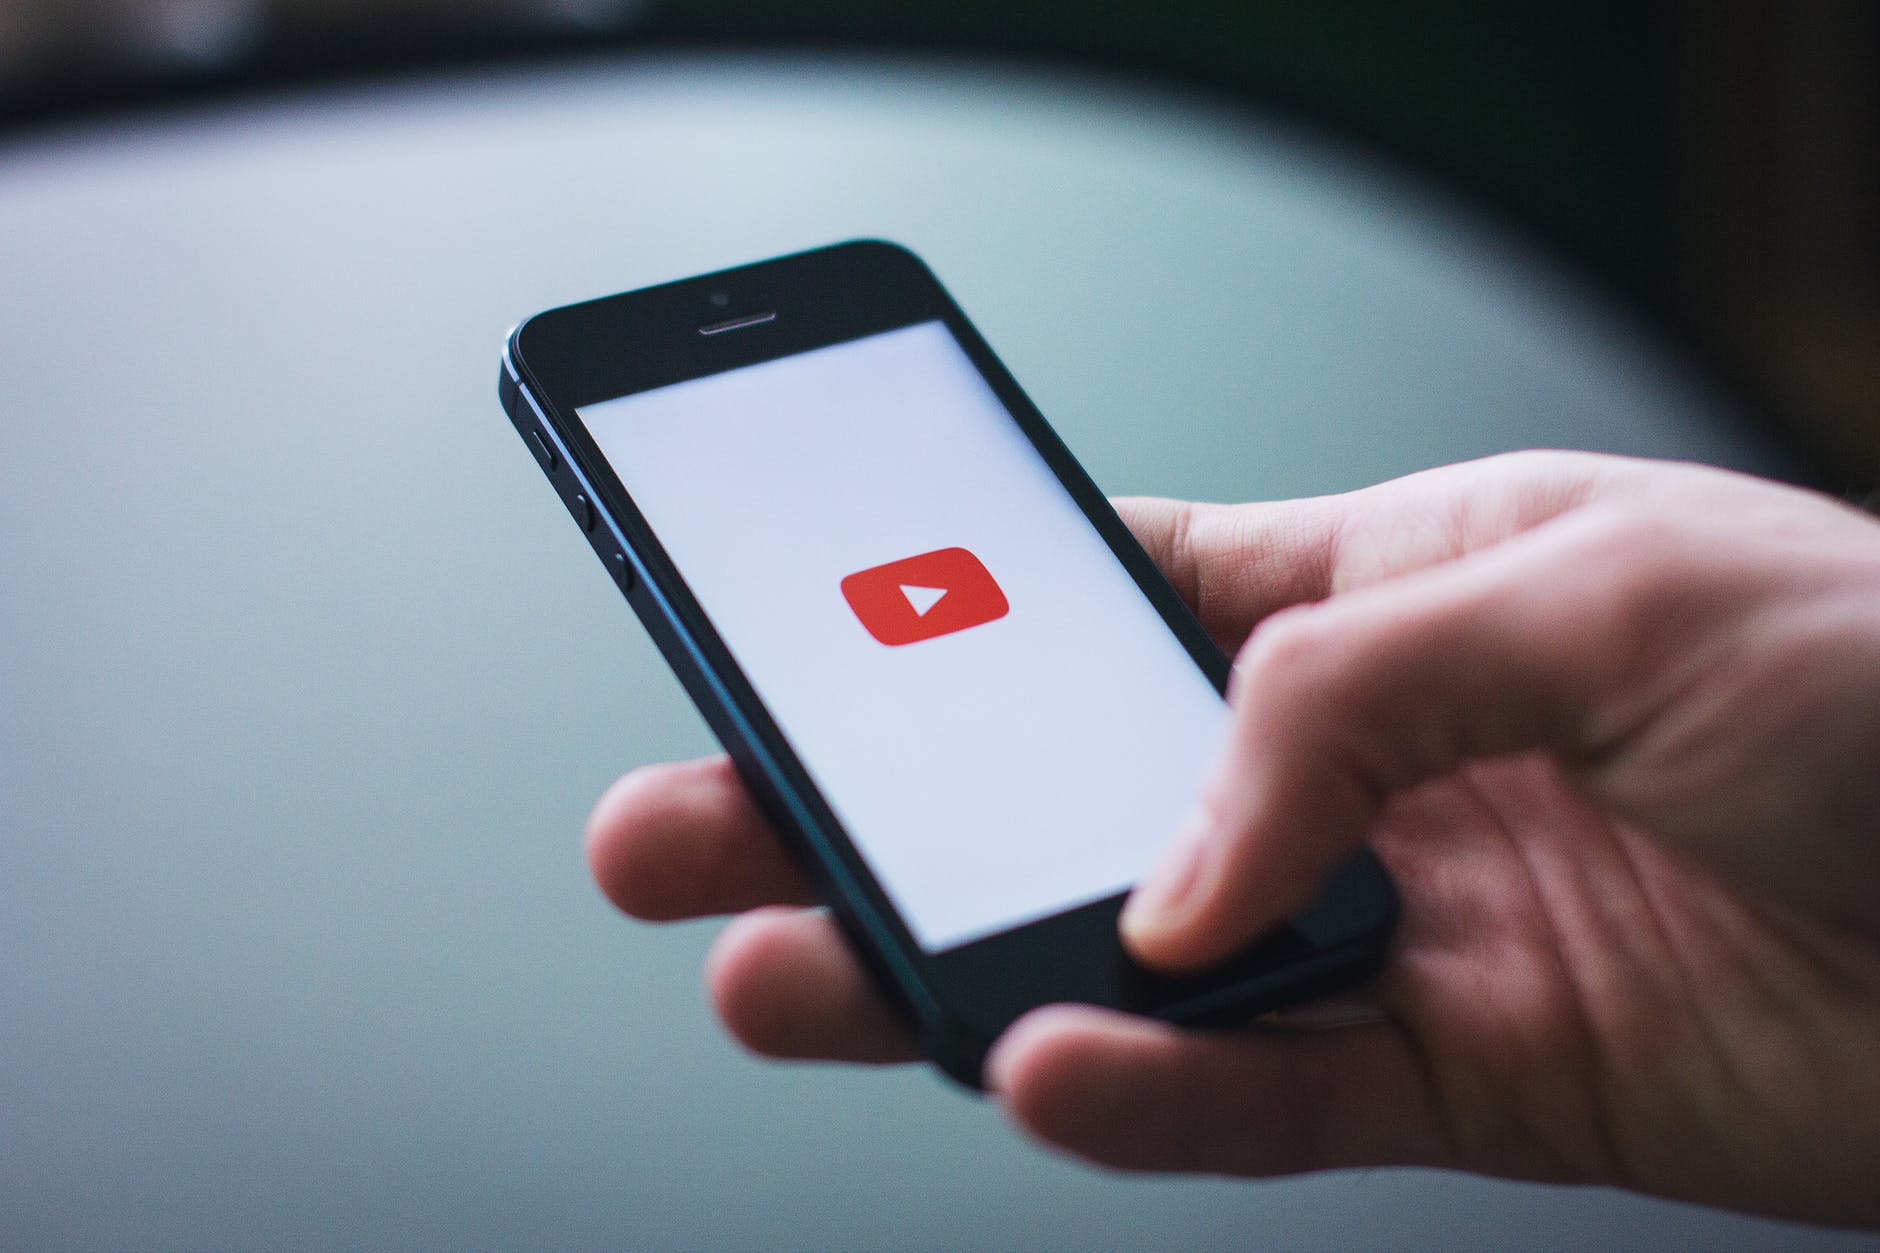 Smart phone displaying the YouTube logo